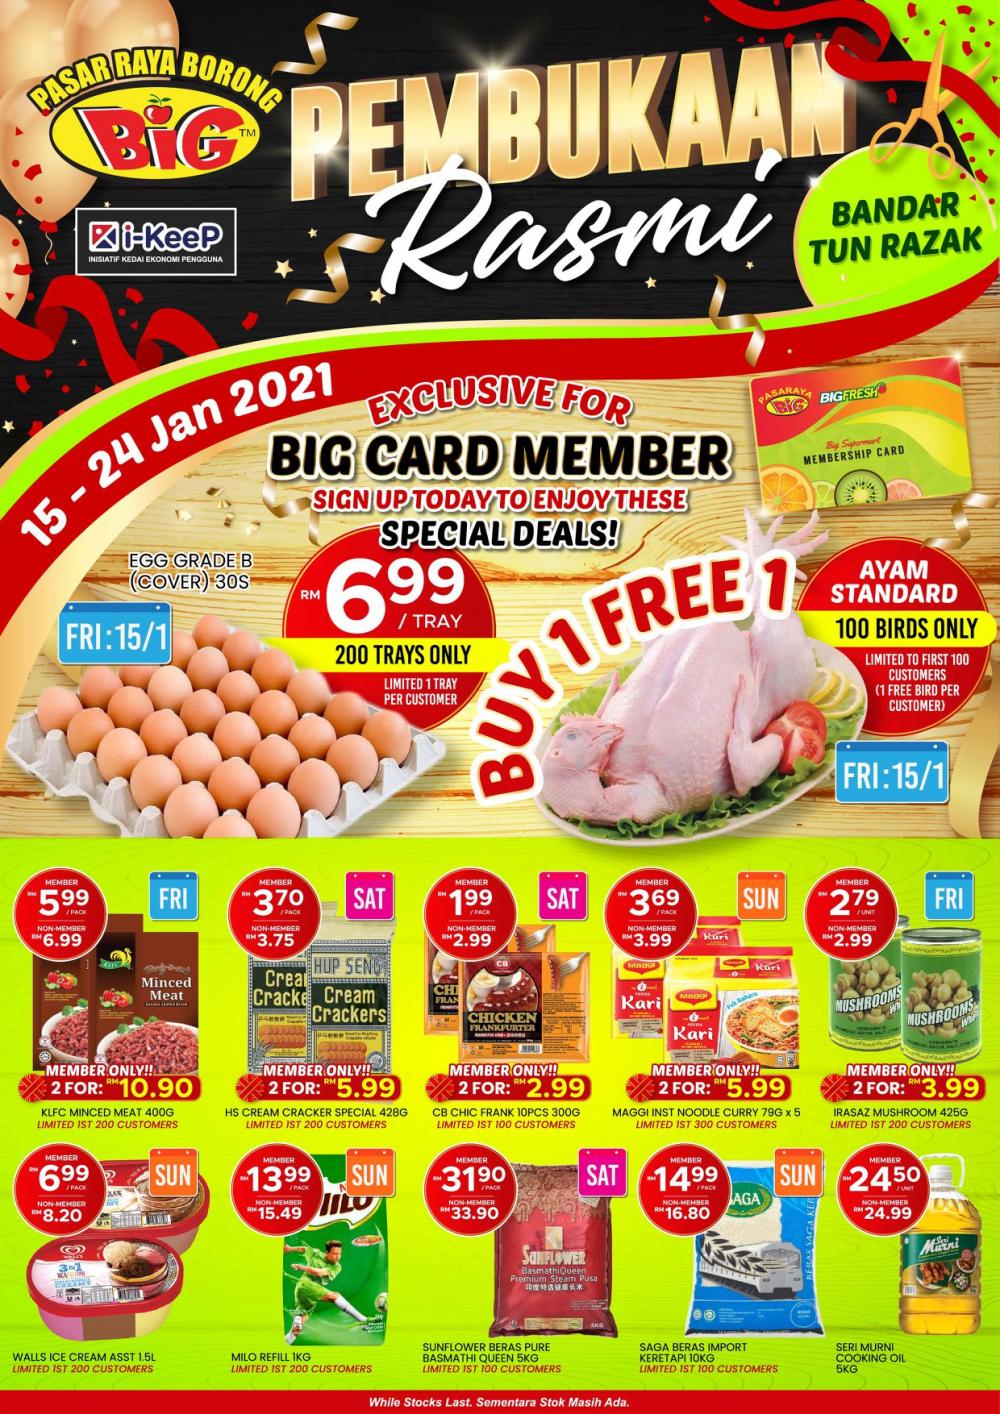 Pasaraya BiG Bandar Tun Razak Opening Promotion (15 January 2021 - 24 January 2021)